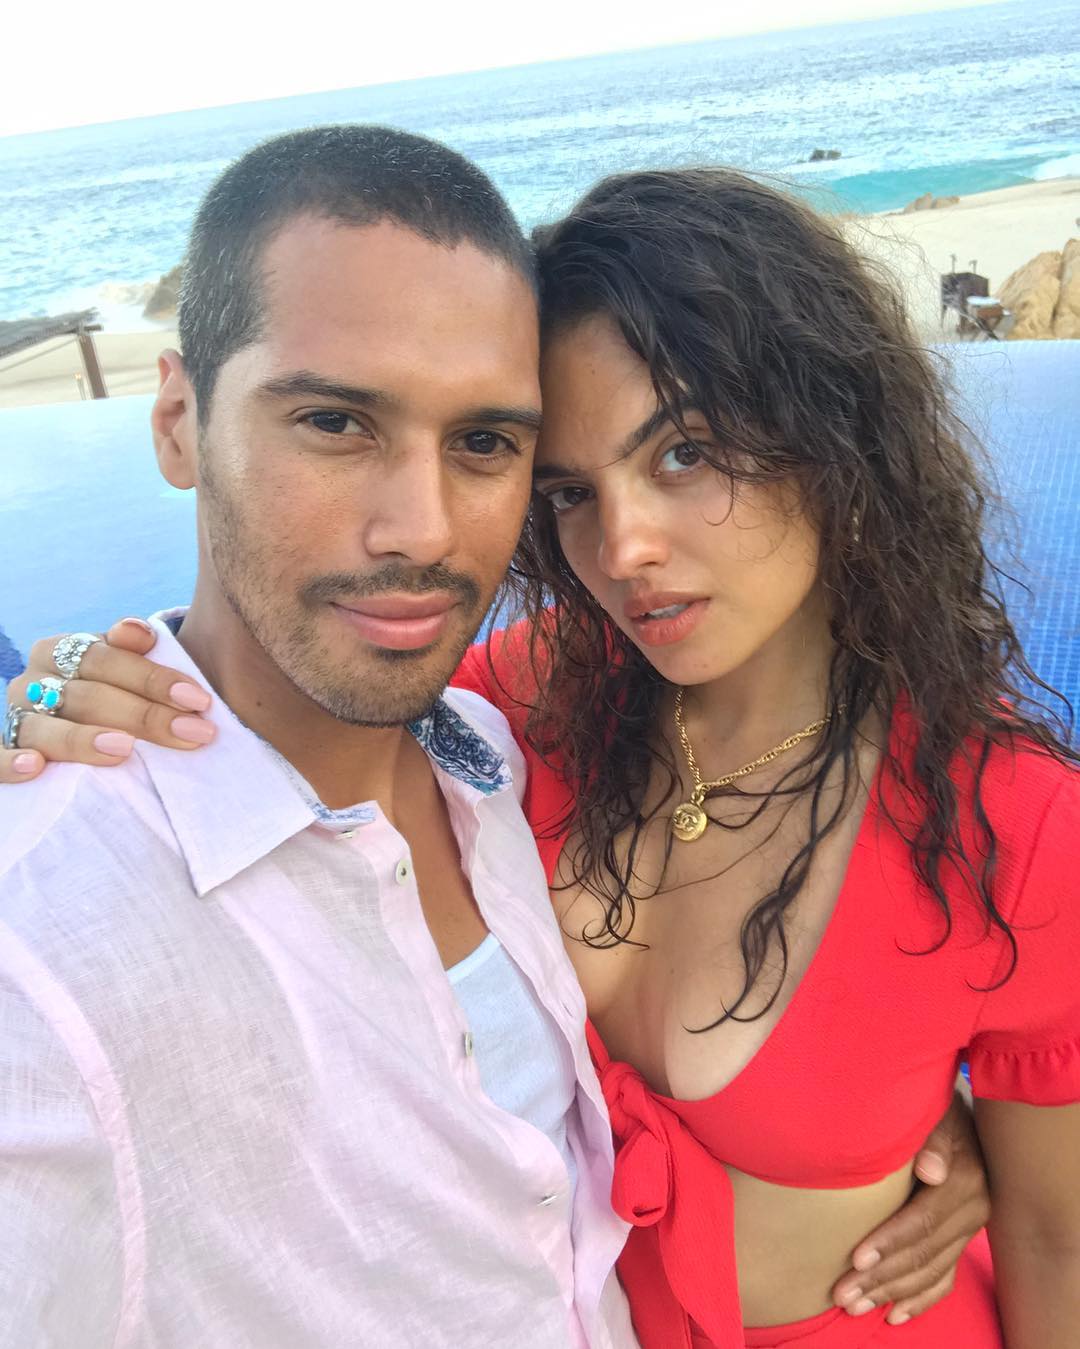 Nina Drama, aka Nina Marie Daniele, with her boyfriend Jhanelle Castillo in September 2018